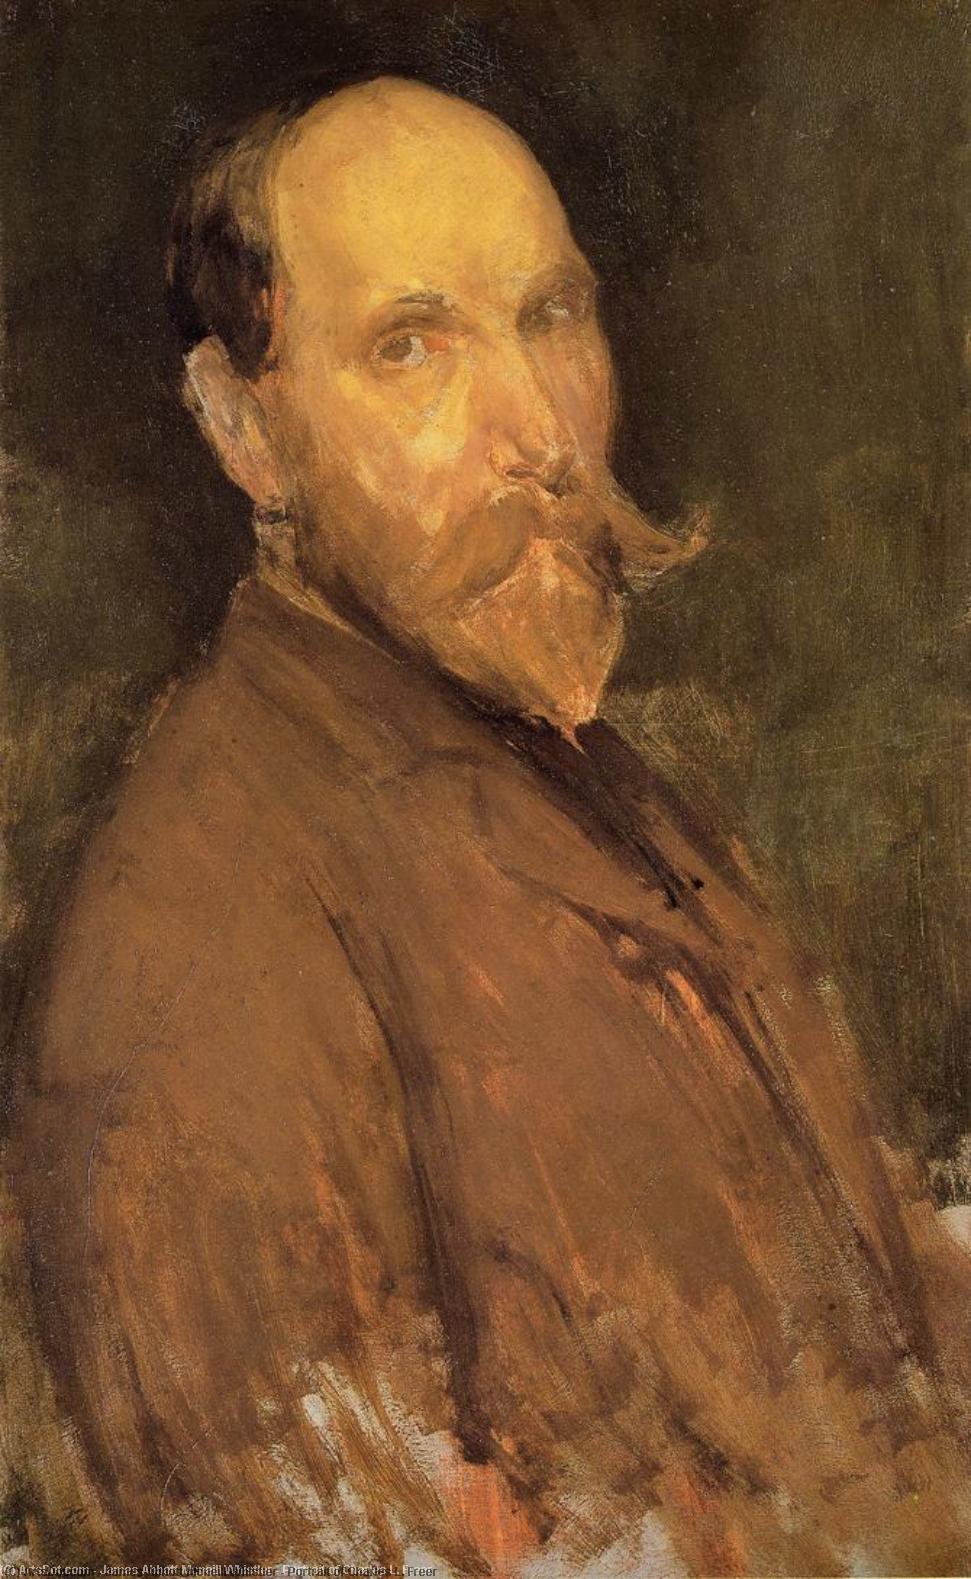 Comprar Reproducciones De Arte Del Museo Retrato de Charles L. Freer, 1902 de James Abbott Mcneill Whistler (1834-1903, United States) | ArtsDot.com